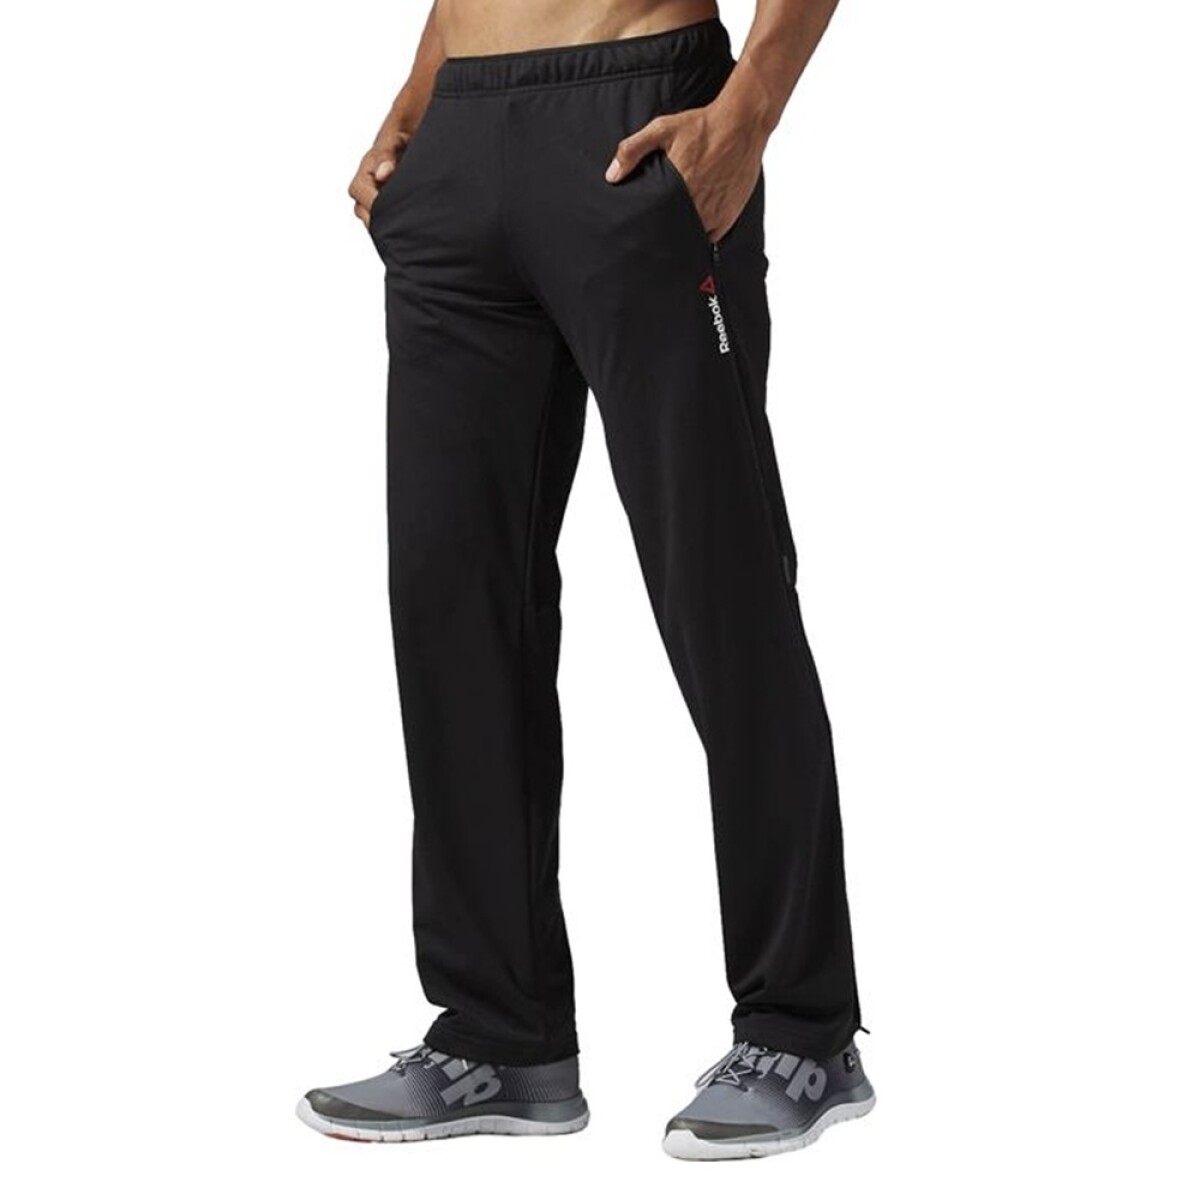 Pantalón Deportivo p/ Fitness Reebok Hombre Os Adv Knit Pnt - Negro 